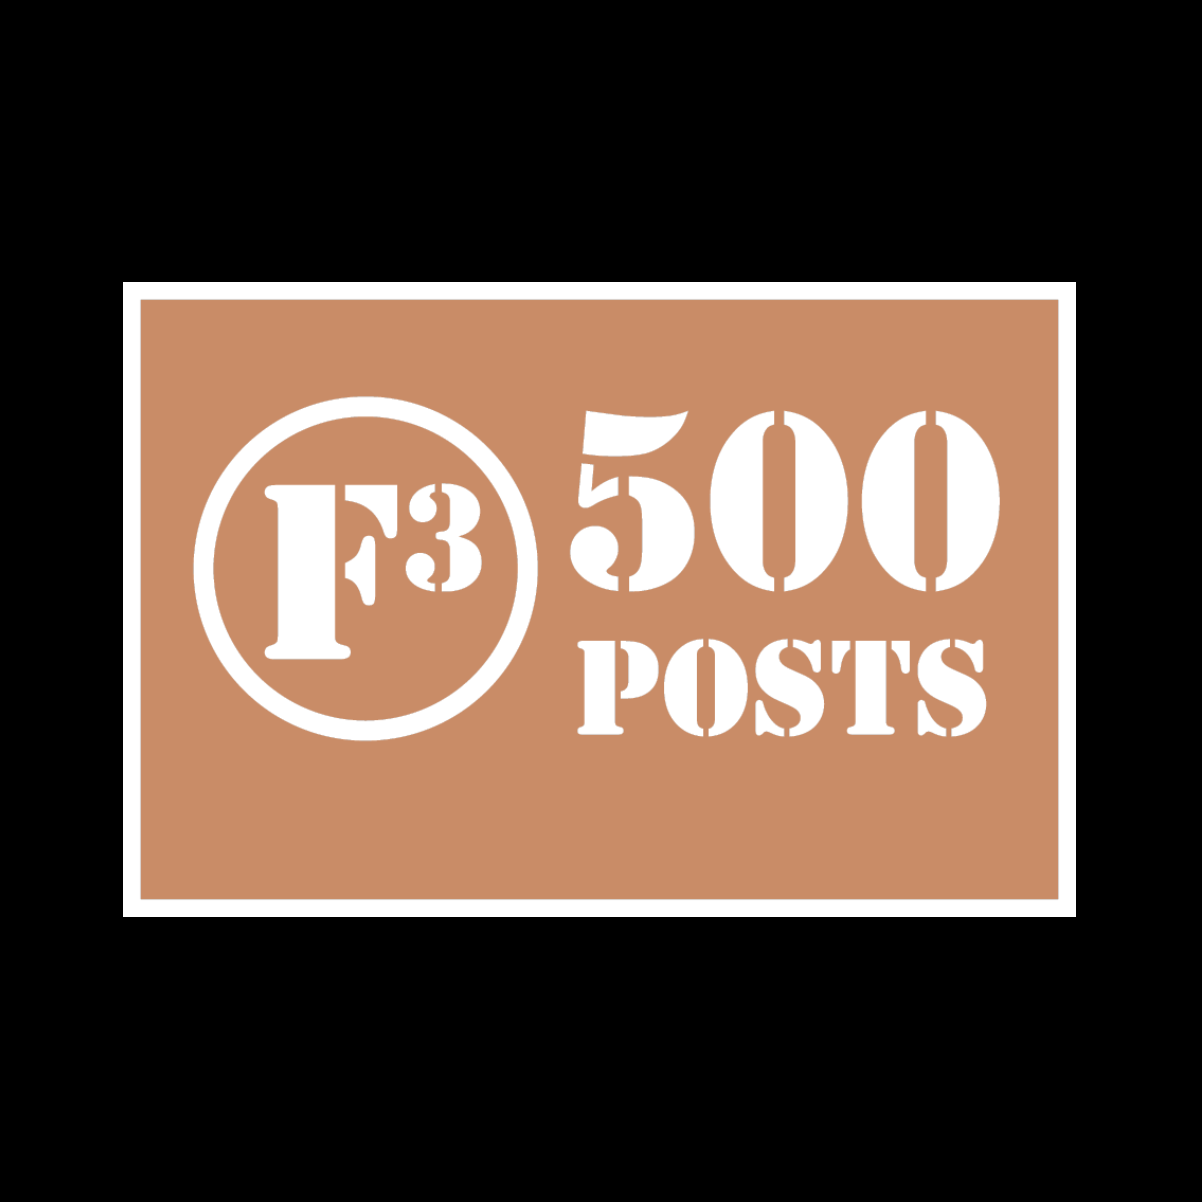 F3 500 Posts Patch